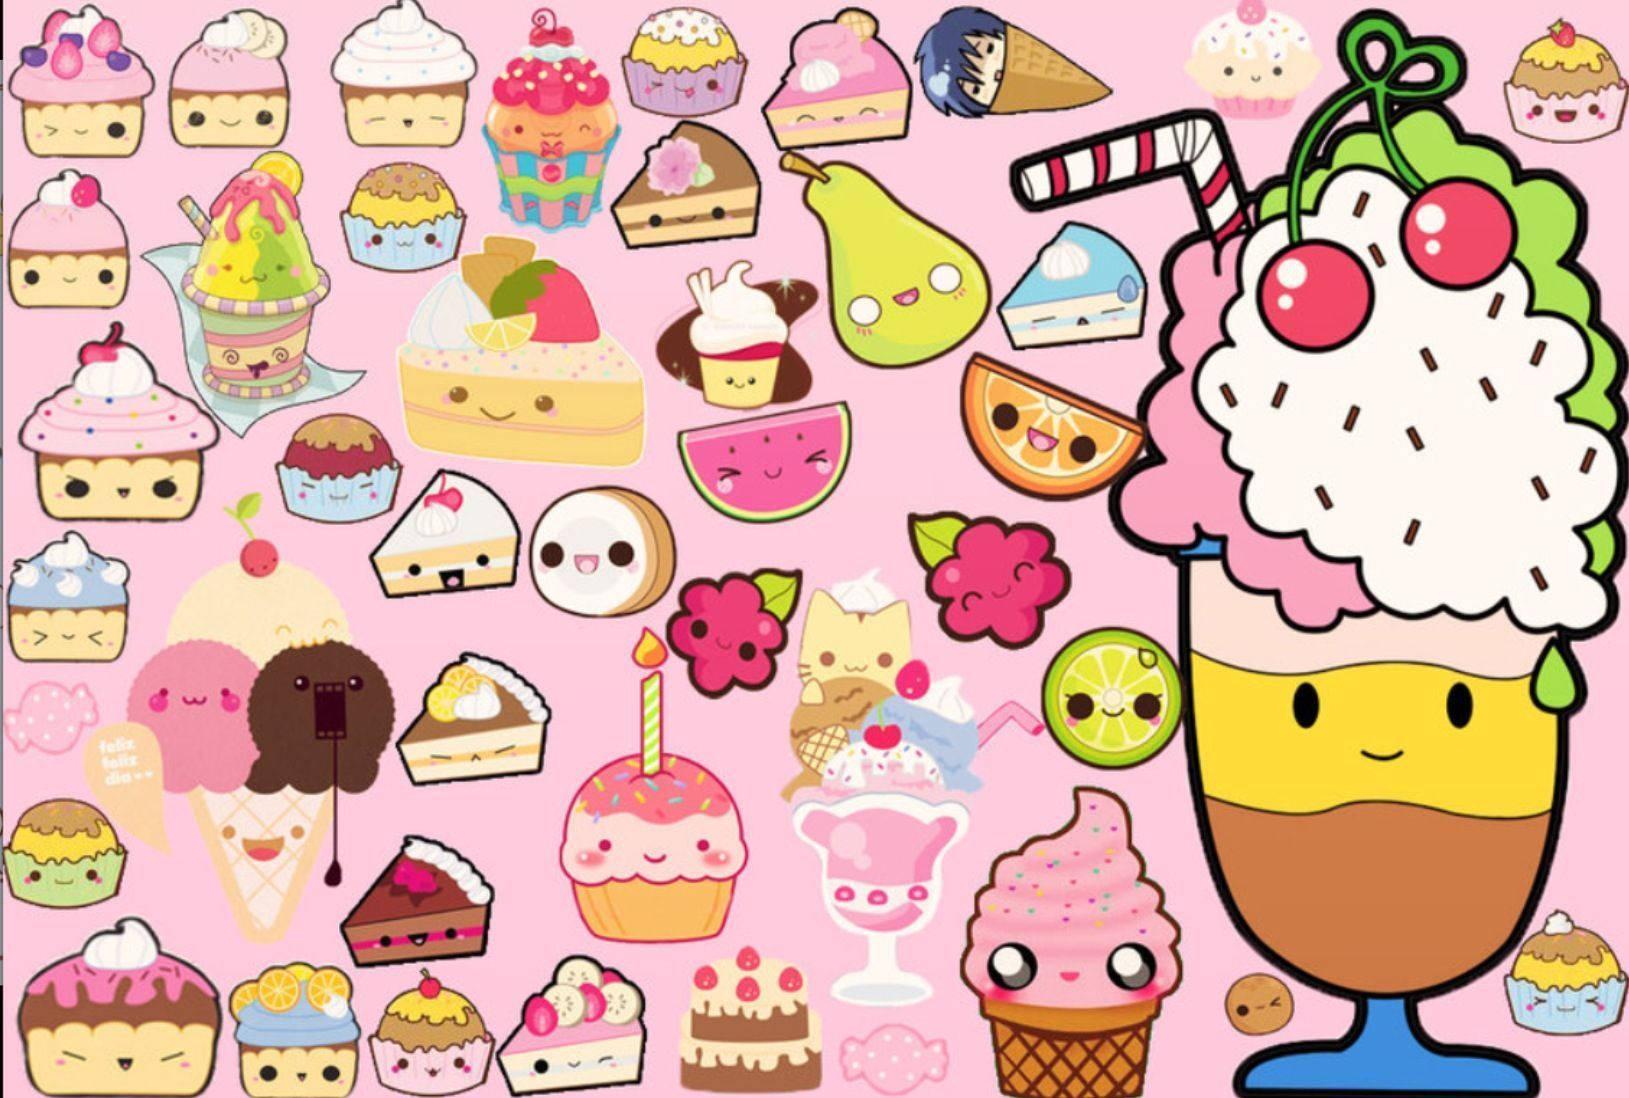 Cute And Adorable Dessert Cartoons On iPad Wallpaper